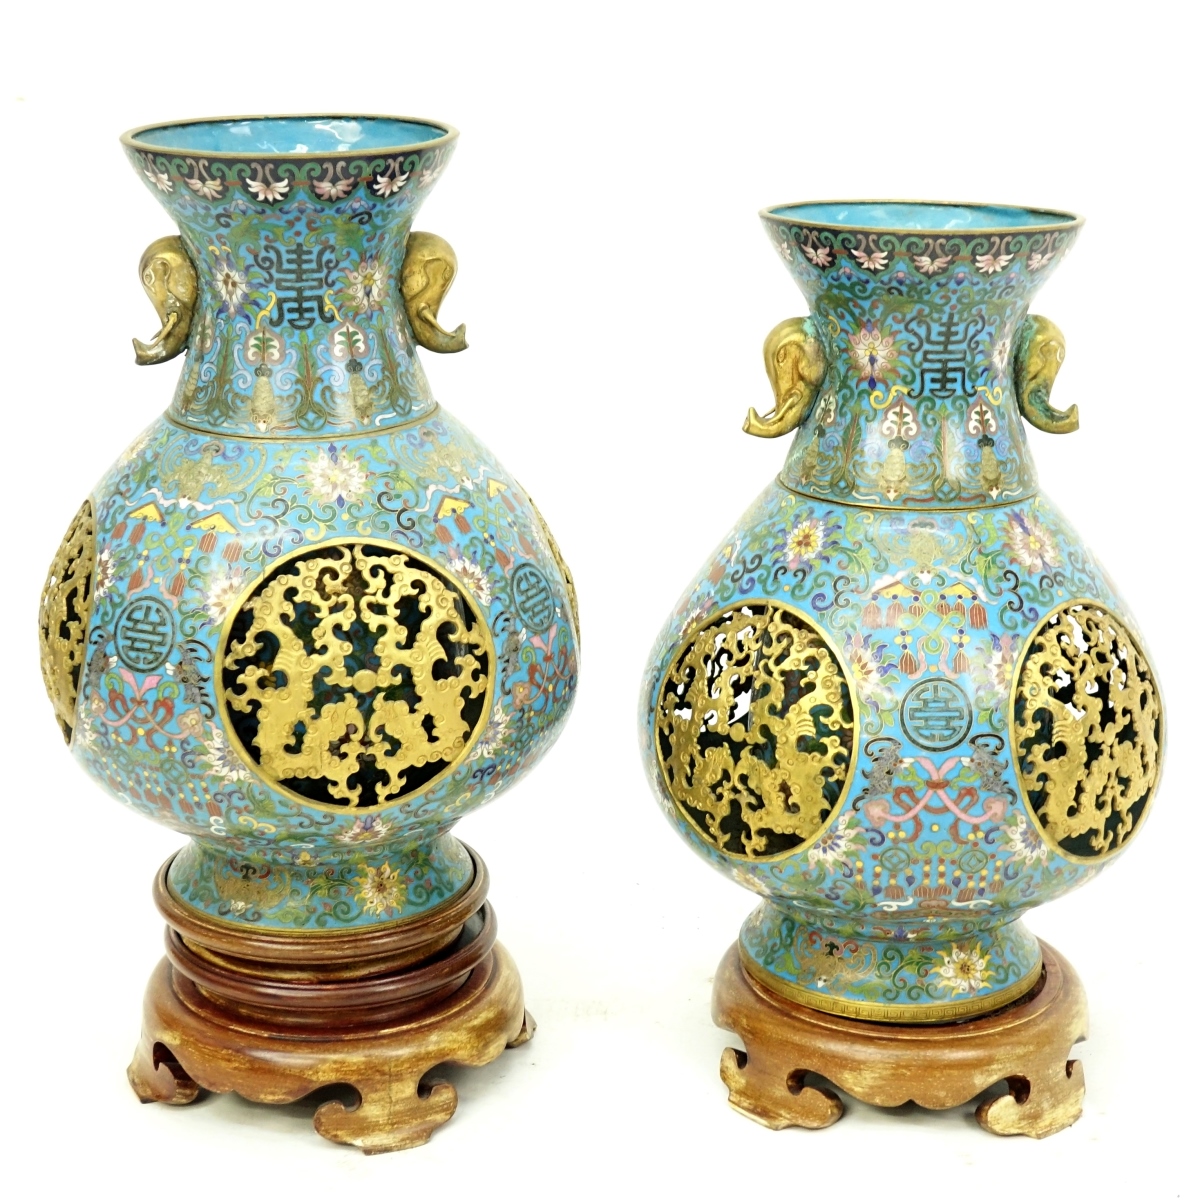 Pair of Impressive Chinese Cloisonne Pierce Vases